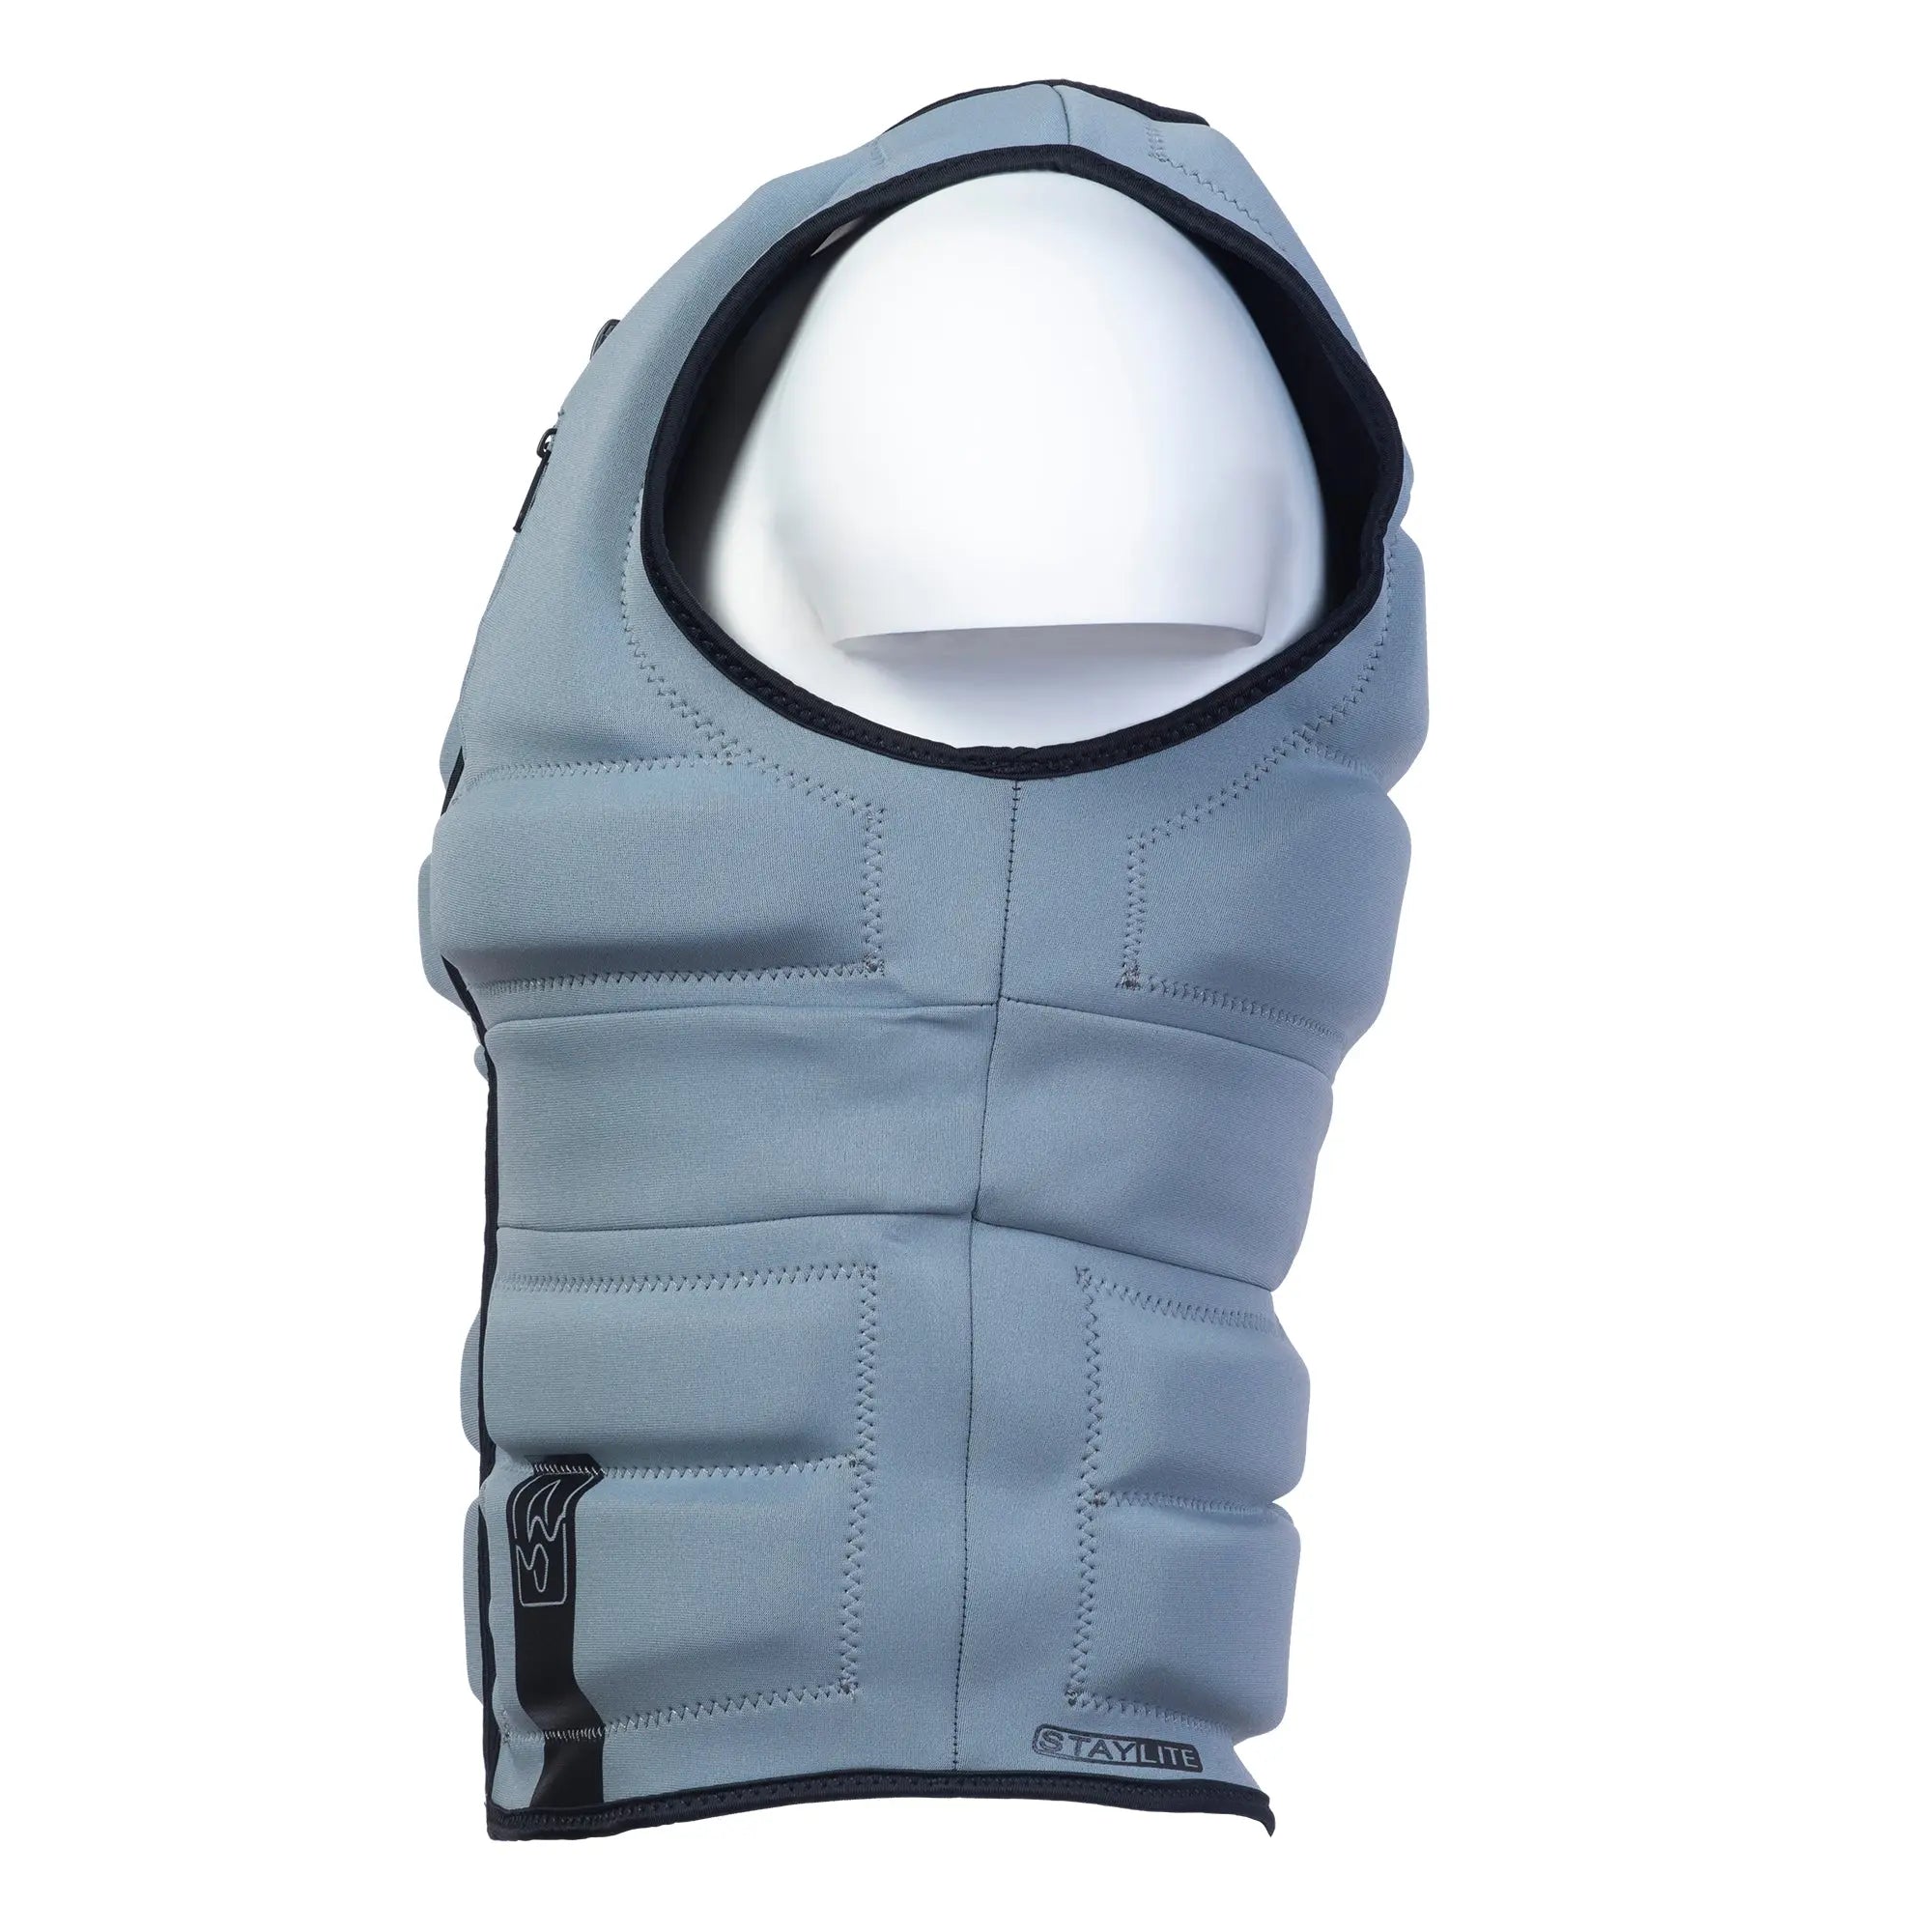 SWELL Wakesurf Vest - Men's Pewter - Ultimate Comfort Neoprene Jacket SWELL Wakesurf